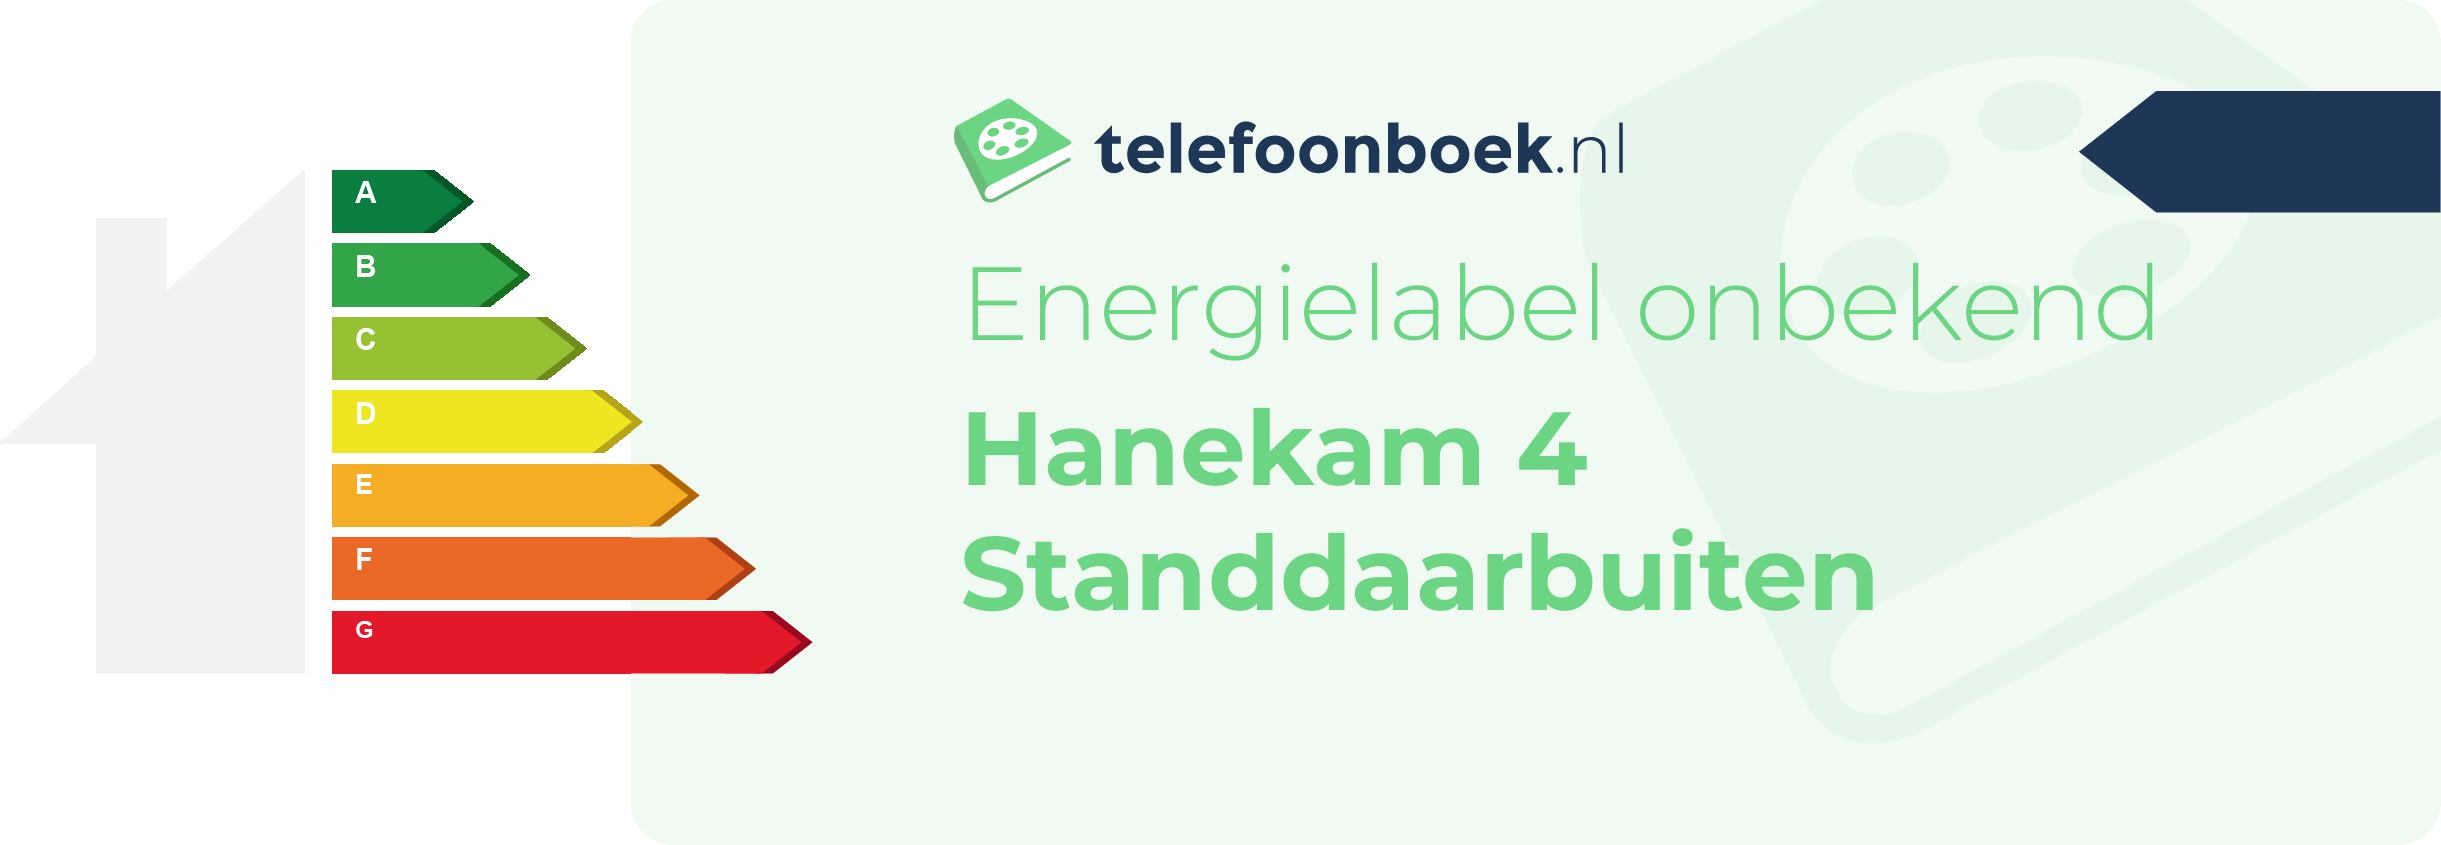 Energielabel Hanekam 4 Standdaarbuiten